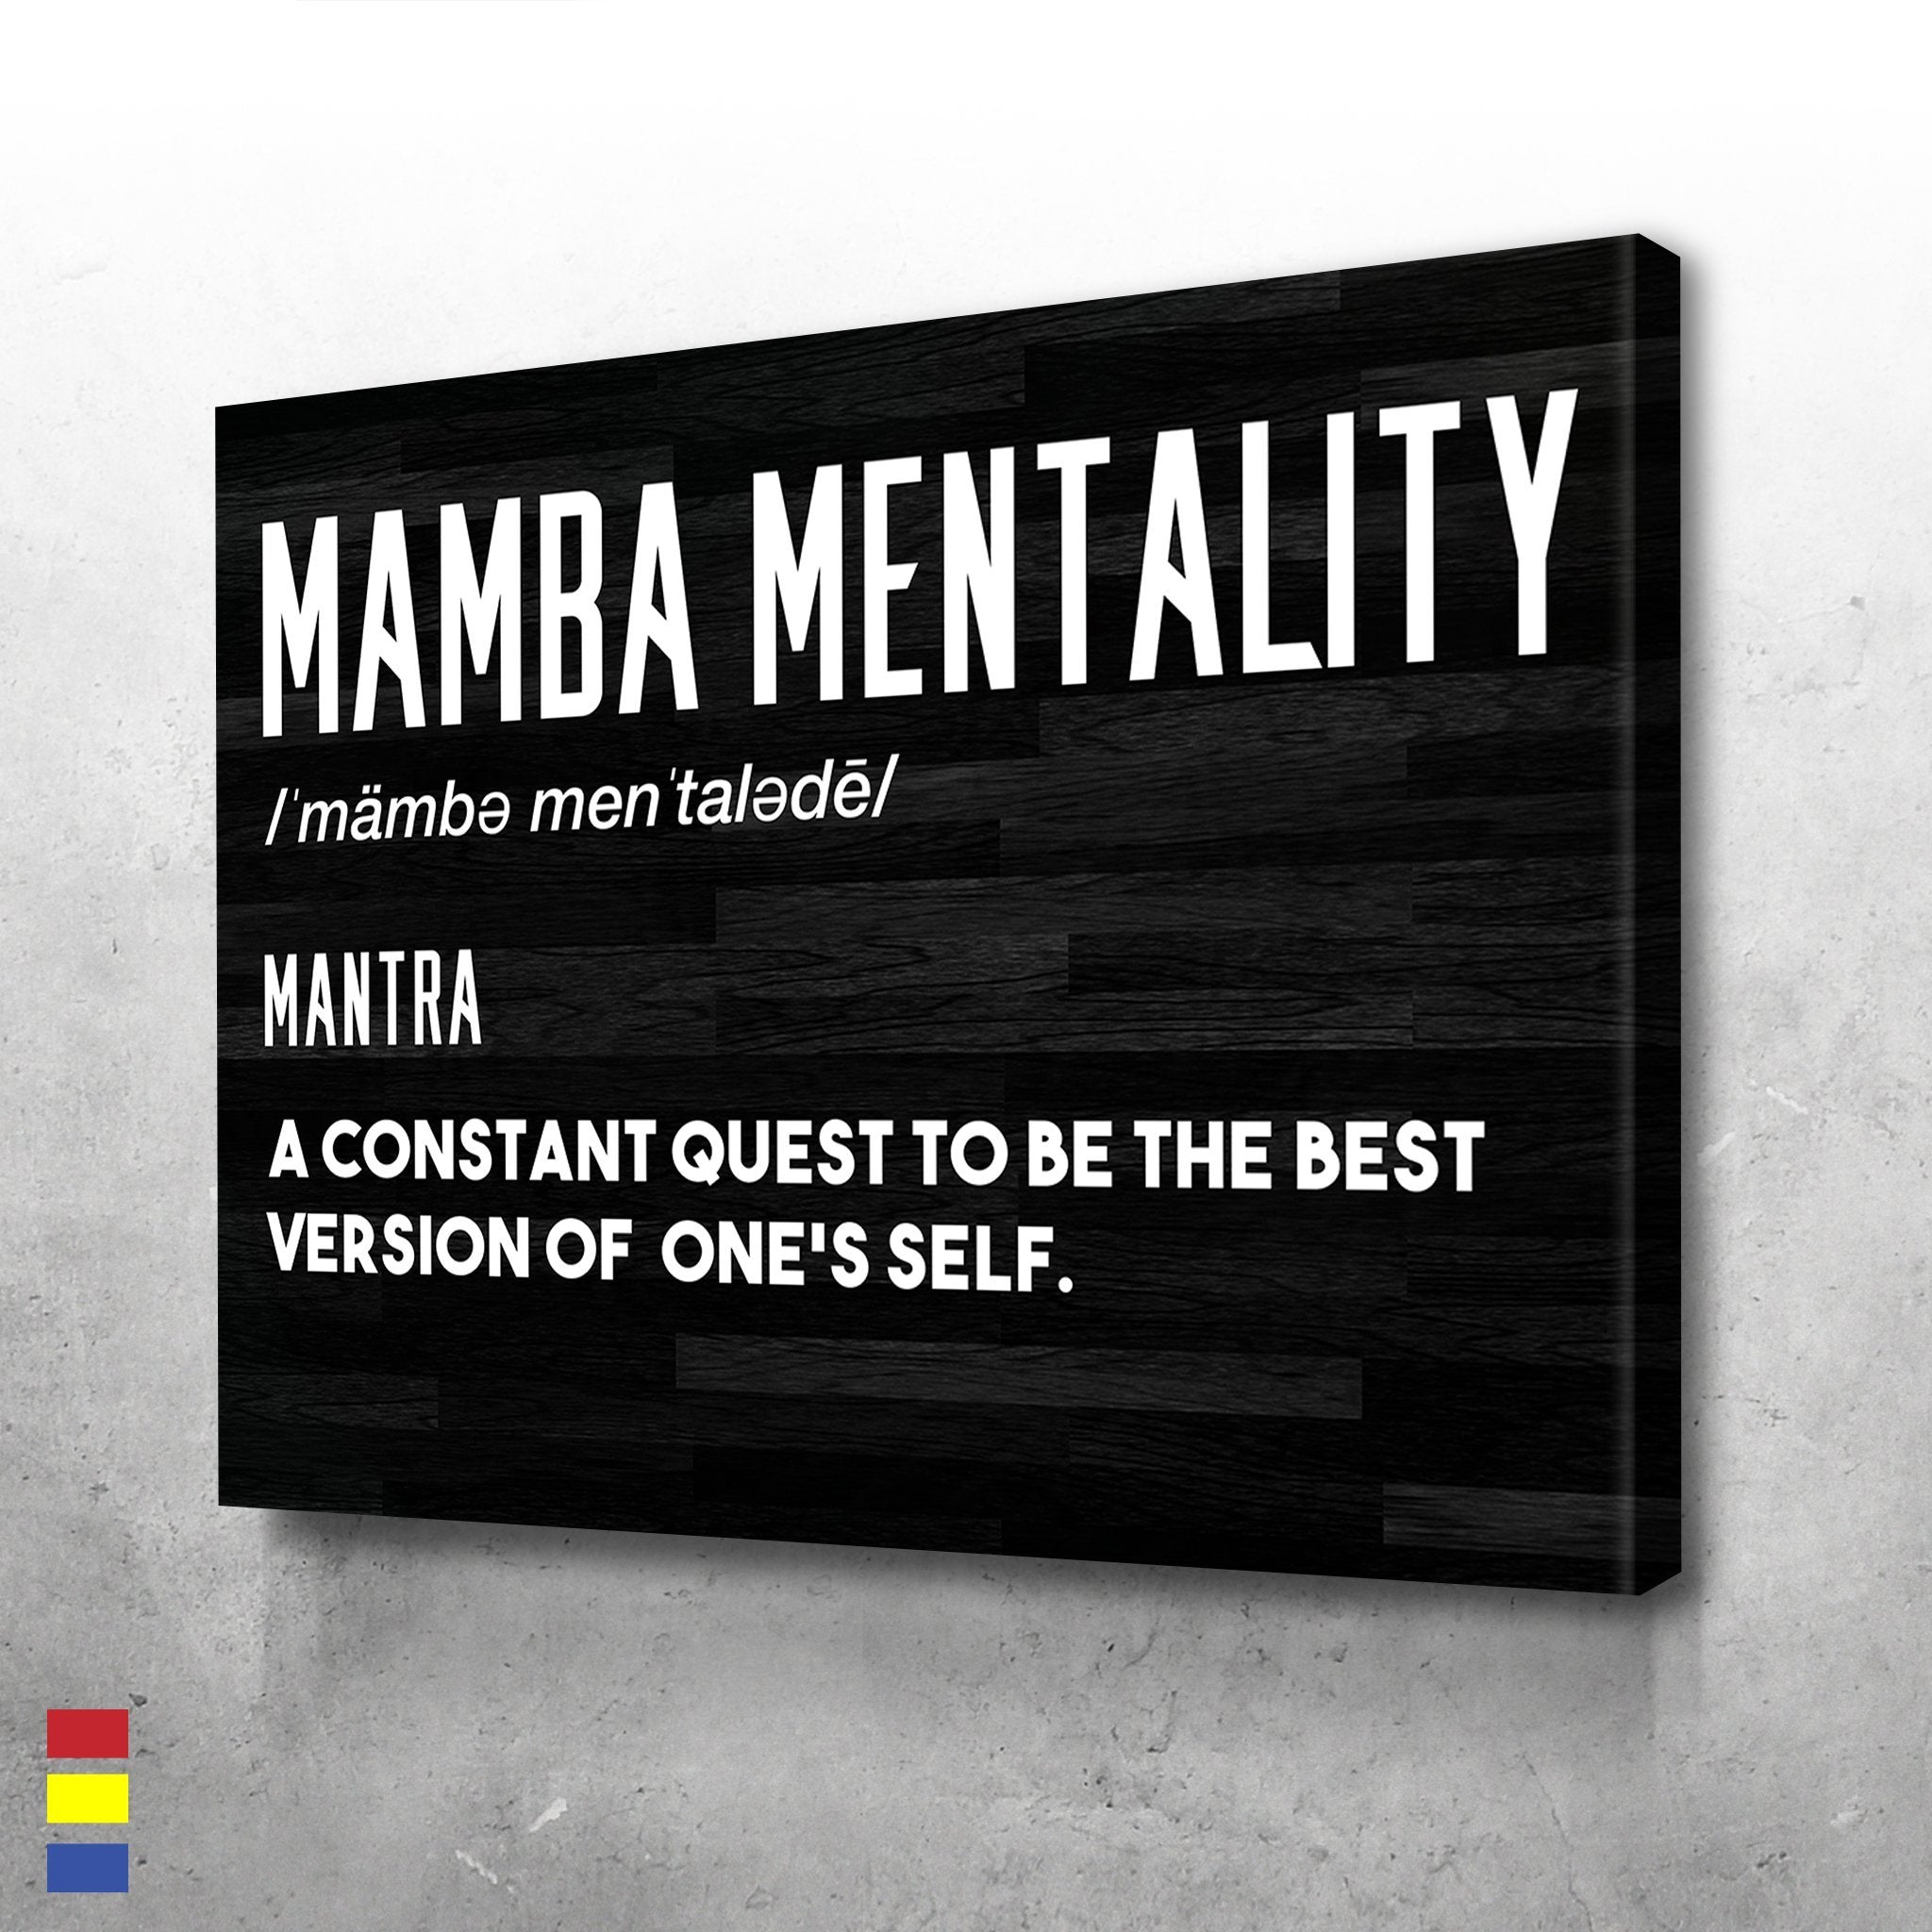 Mambas Mentality : r/bostonceltics